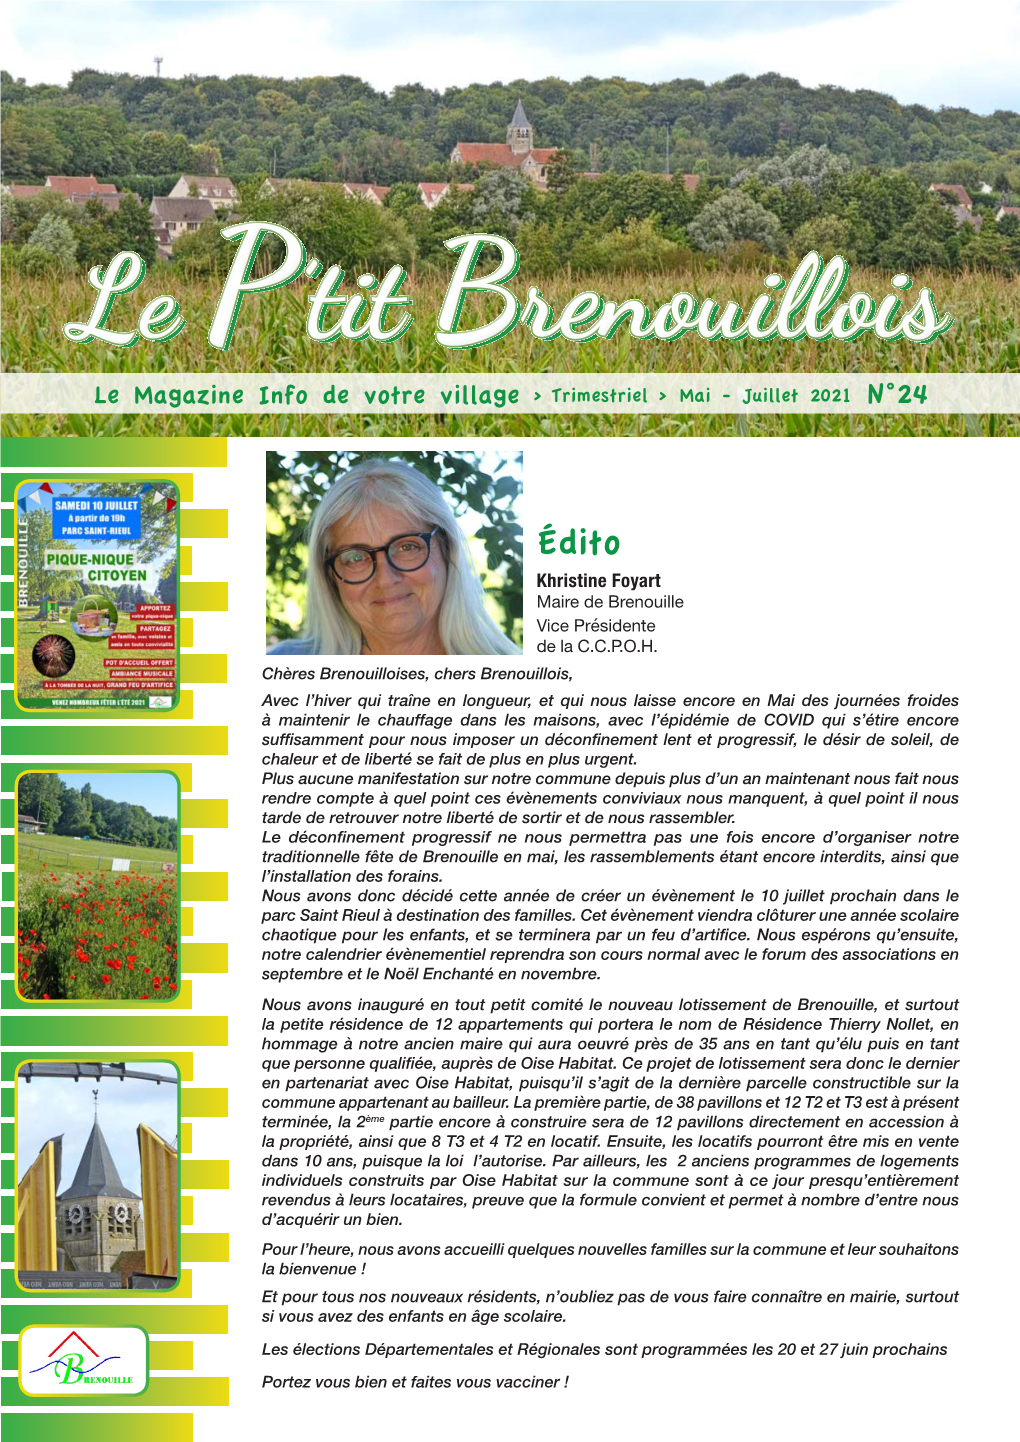 Le P'tit Brenouillois